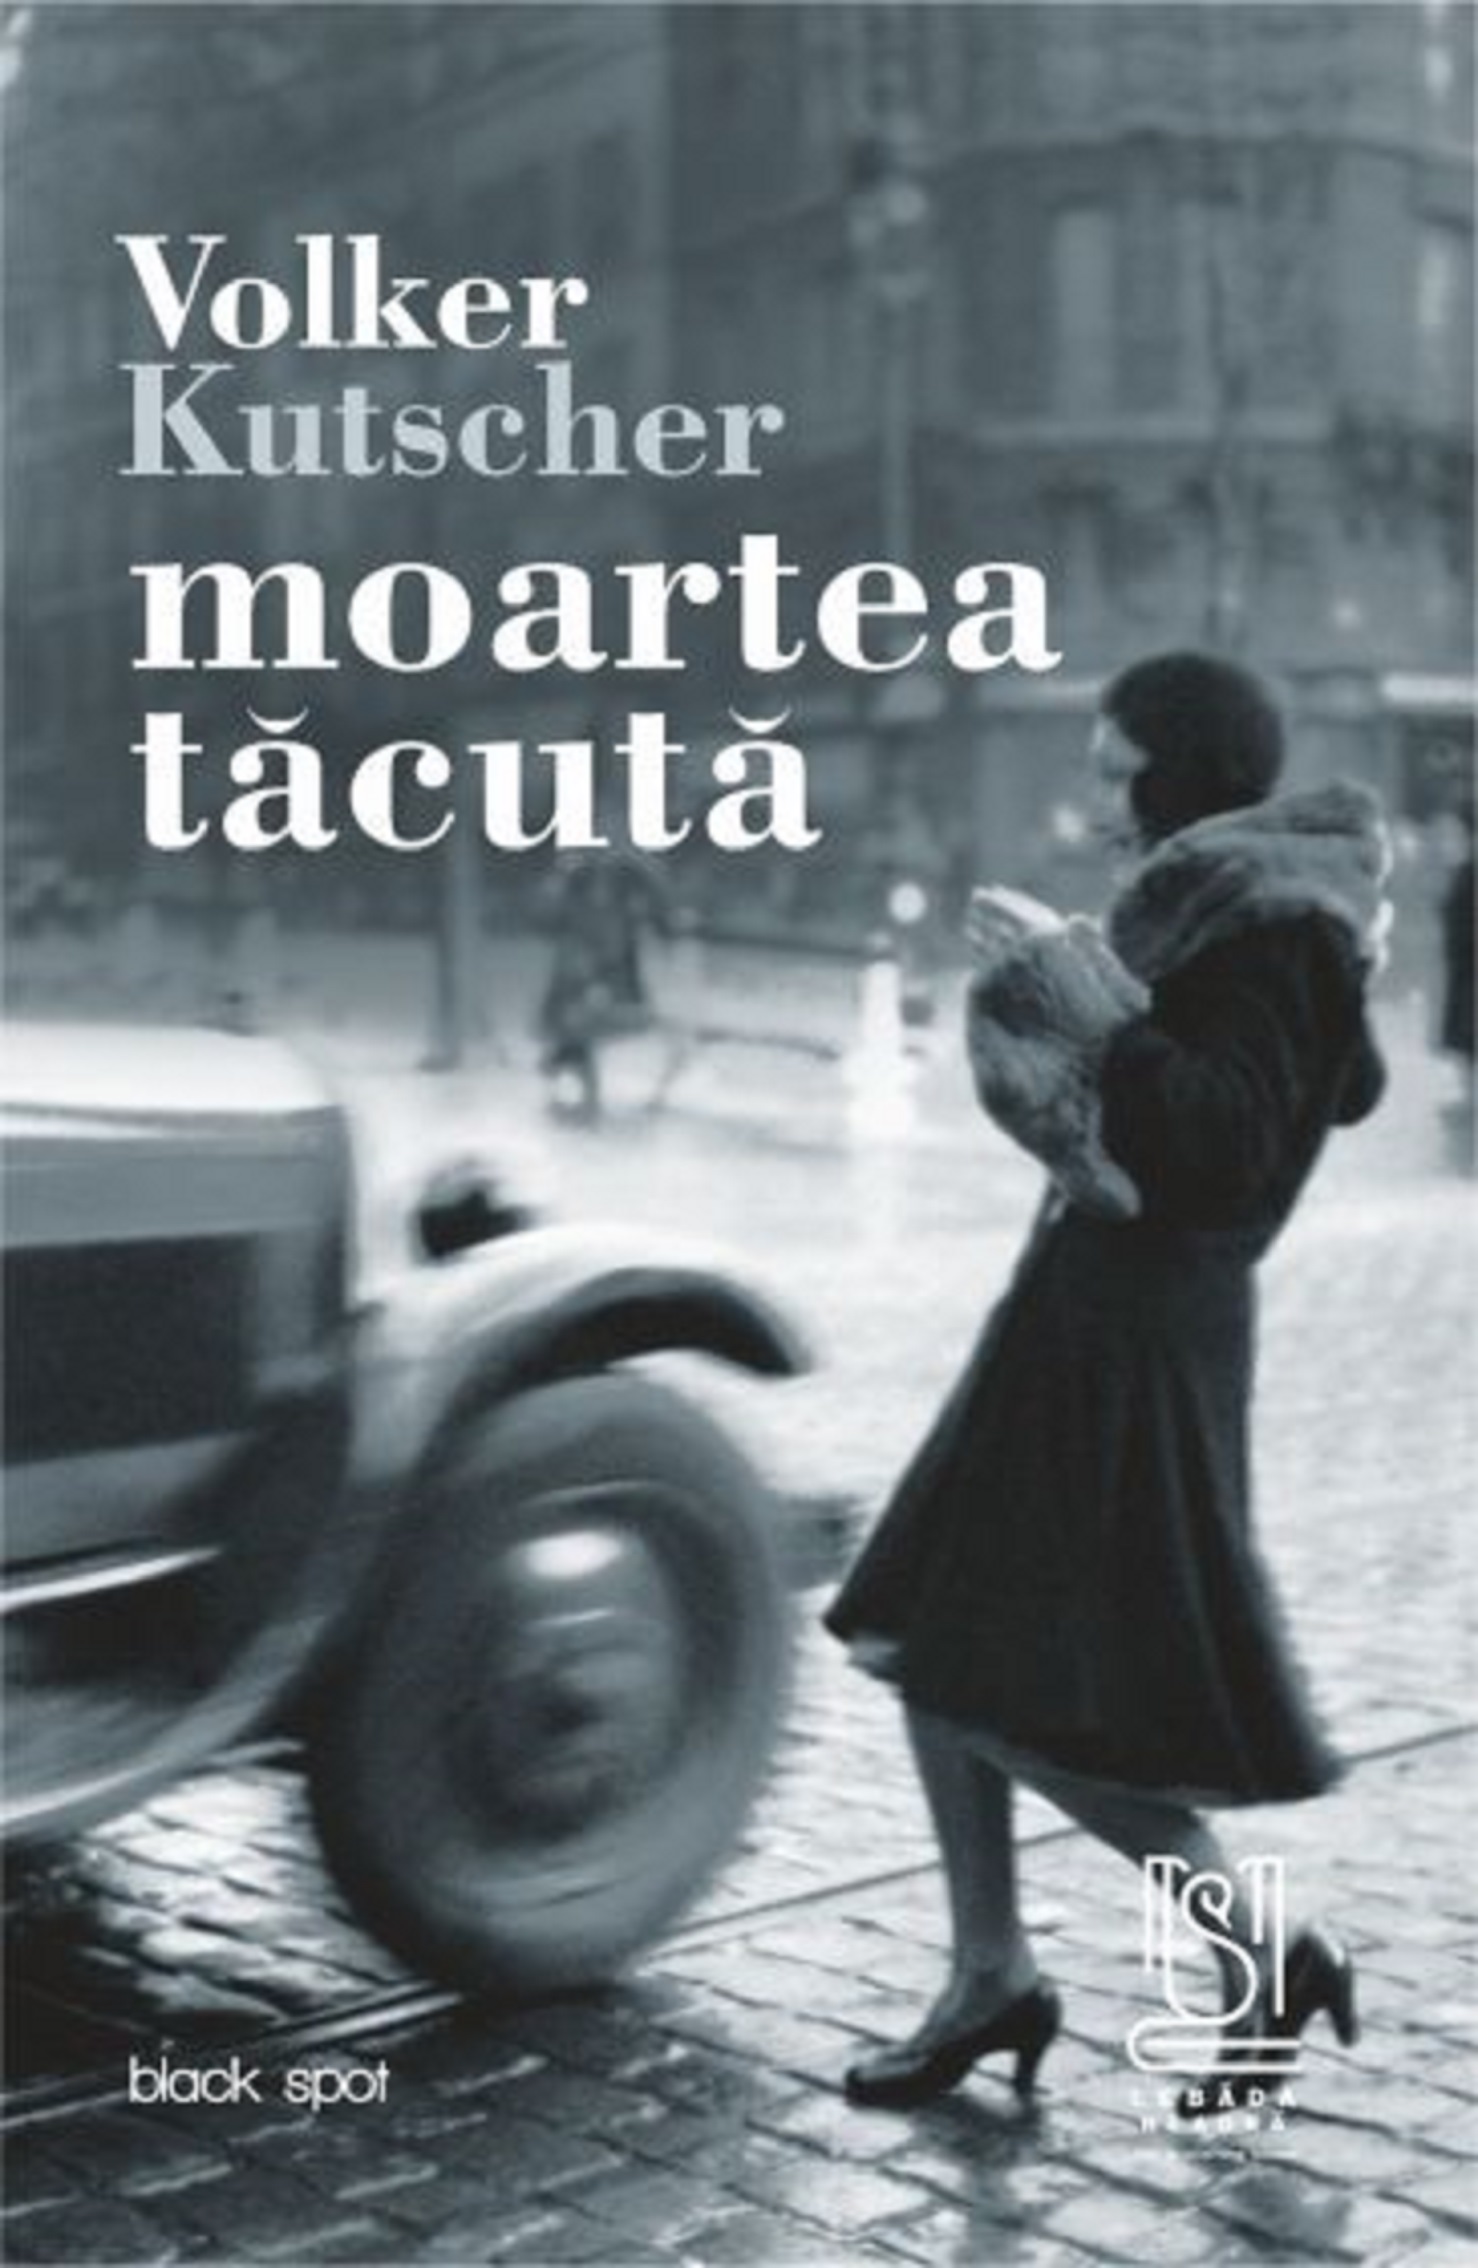 Moartea tacuta | Volker Kutscher carturesti.ro poza bestsellers.ro